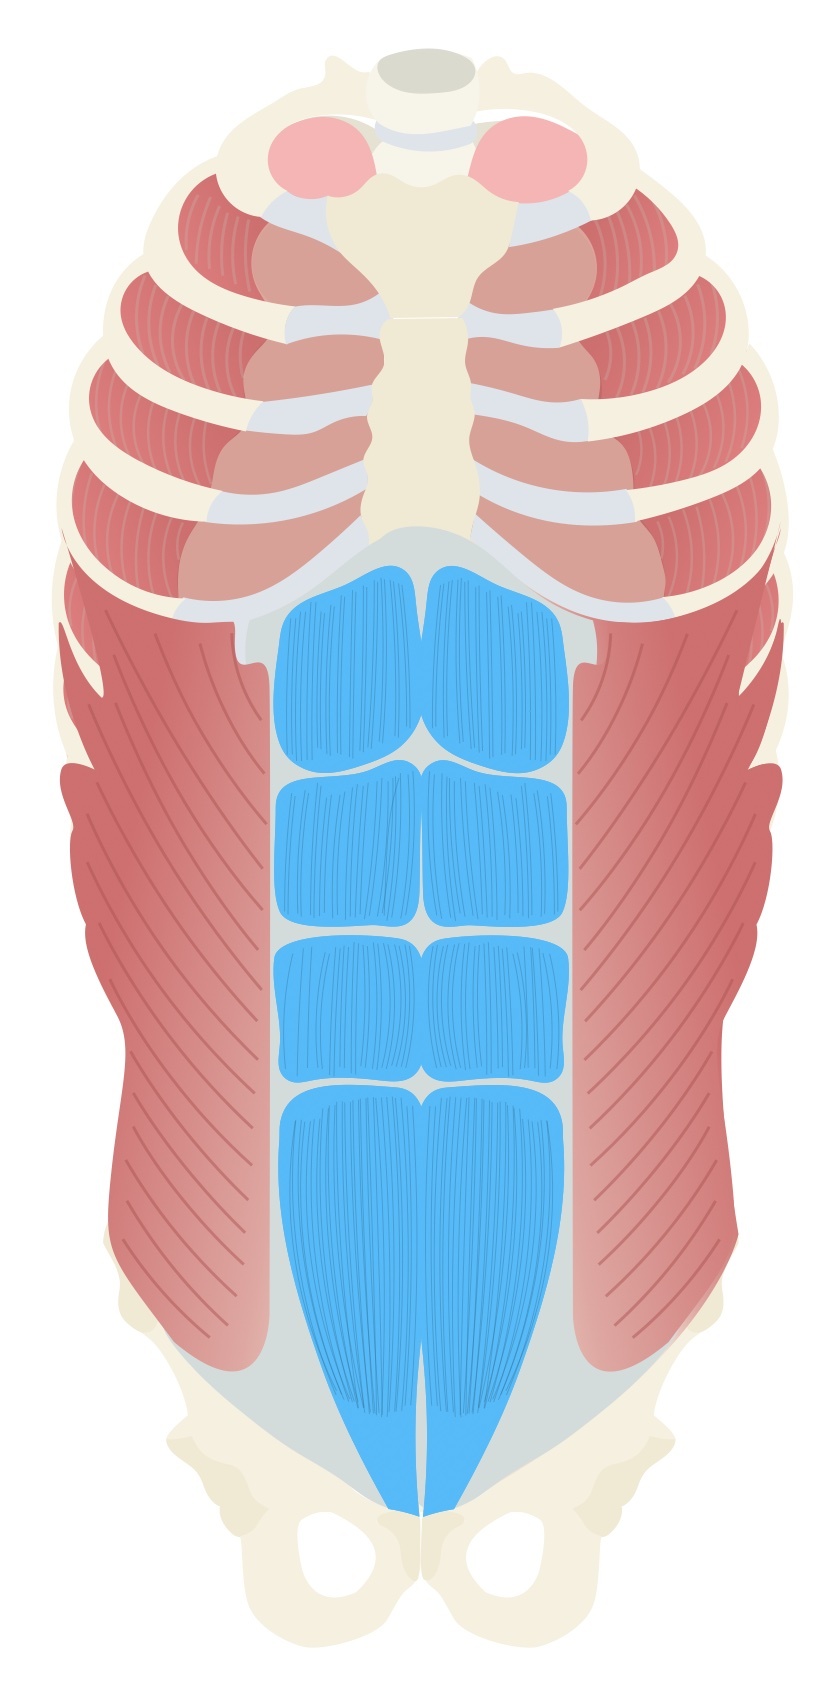 Rectus abdominis anatomy